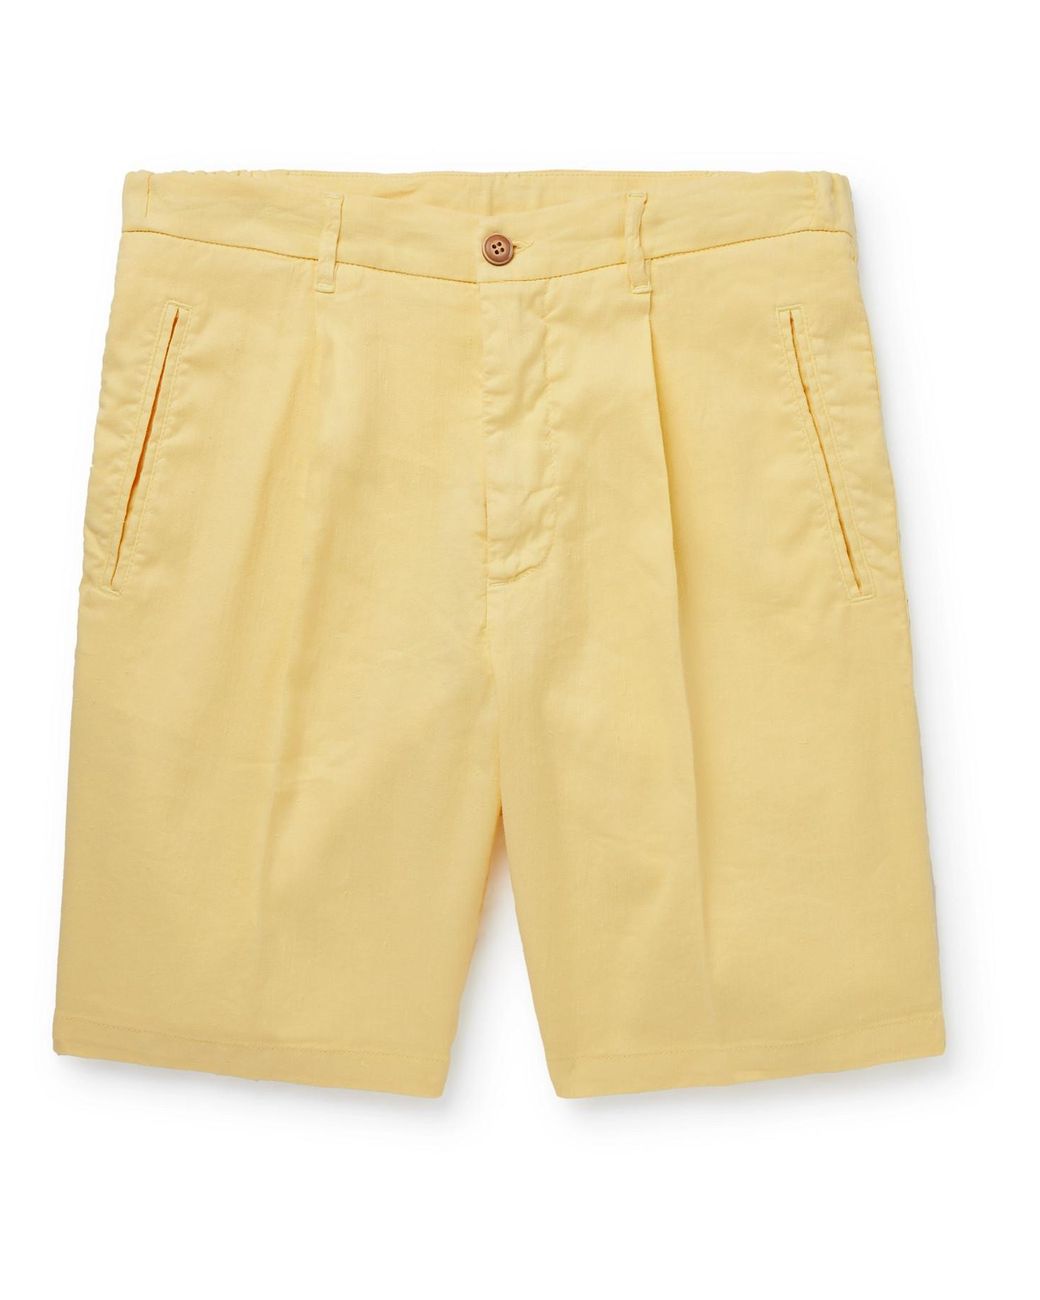 Altea Slub Linen-blend Shorts in Yellow for Men - Lyst